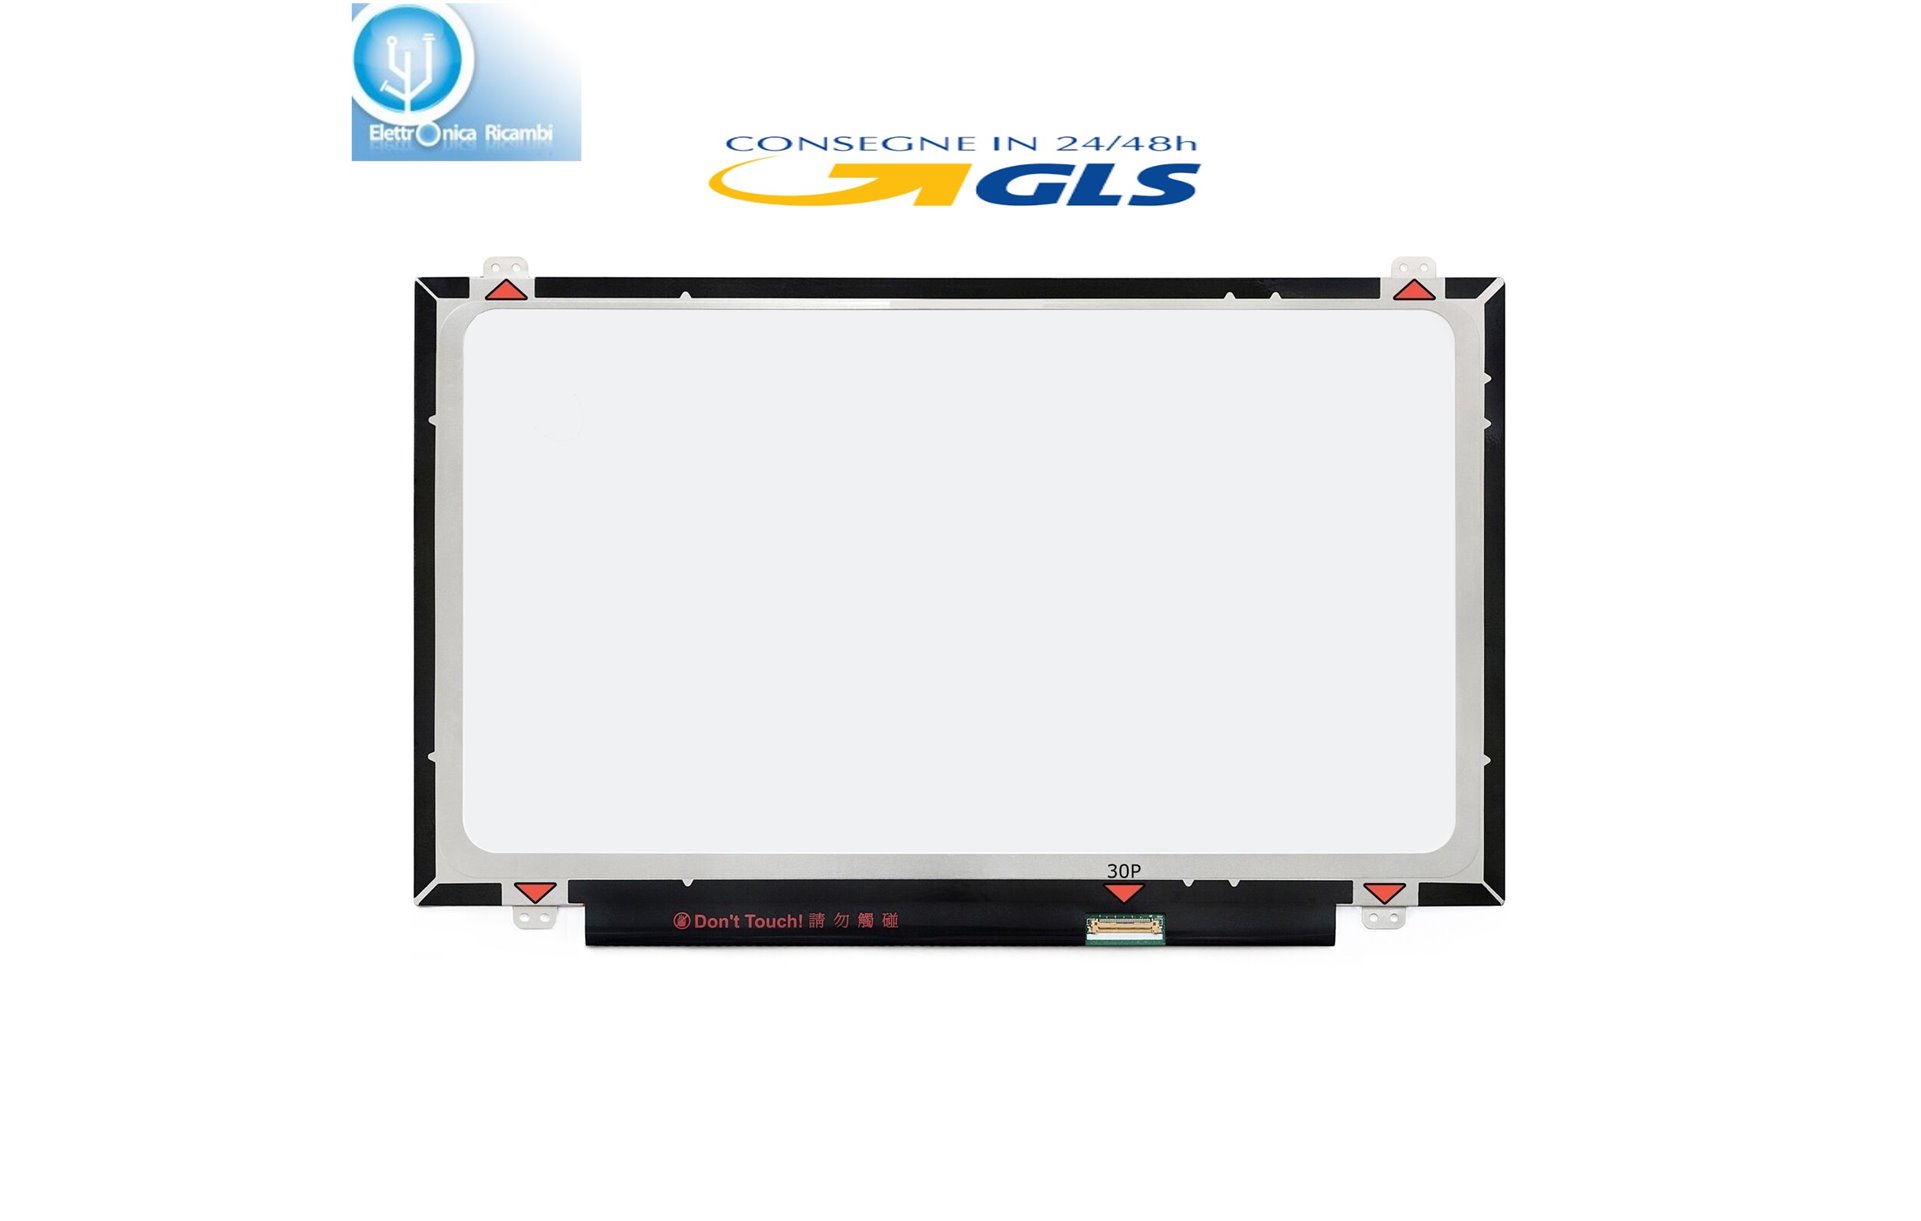 LTN140AT30-401 Display lcd schermo led Slim 30 pin wxga hd (1366x768)